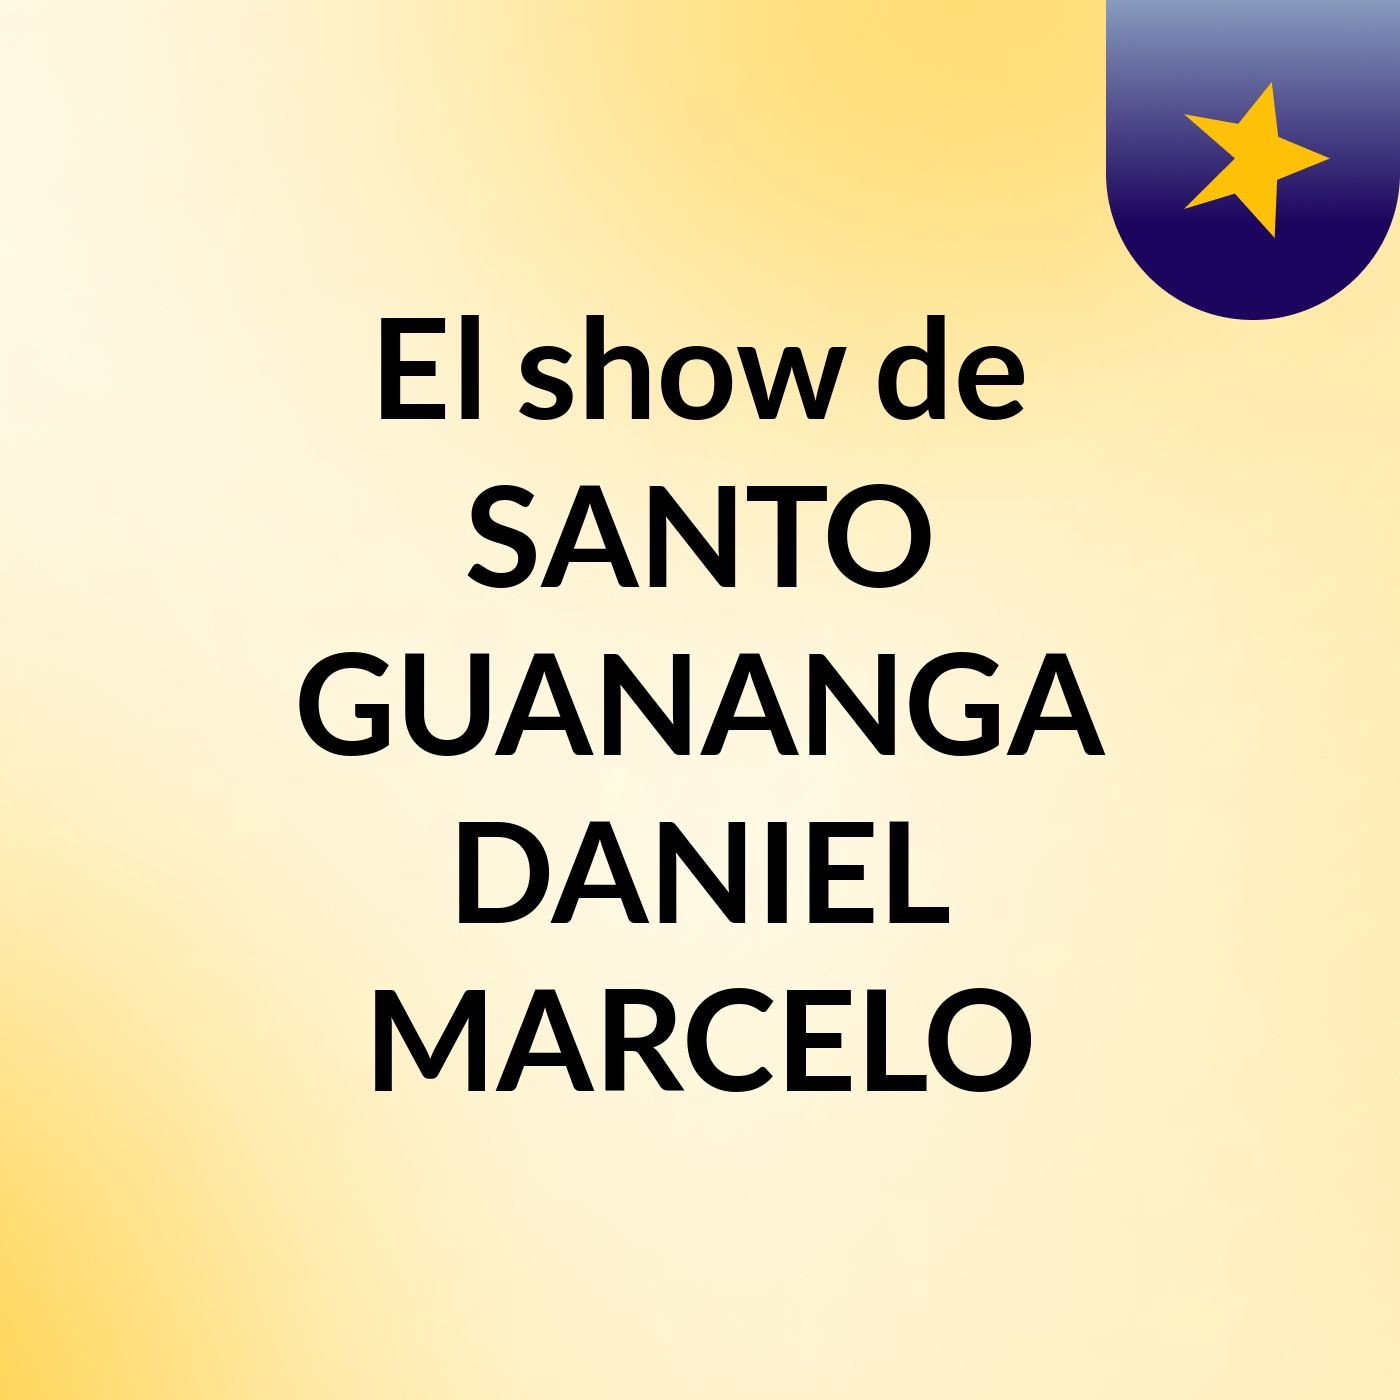 Episodio 2 - El show de SANTO GUANANGA DANIEL MARCELO